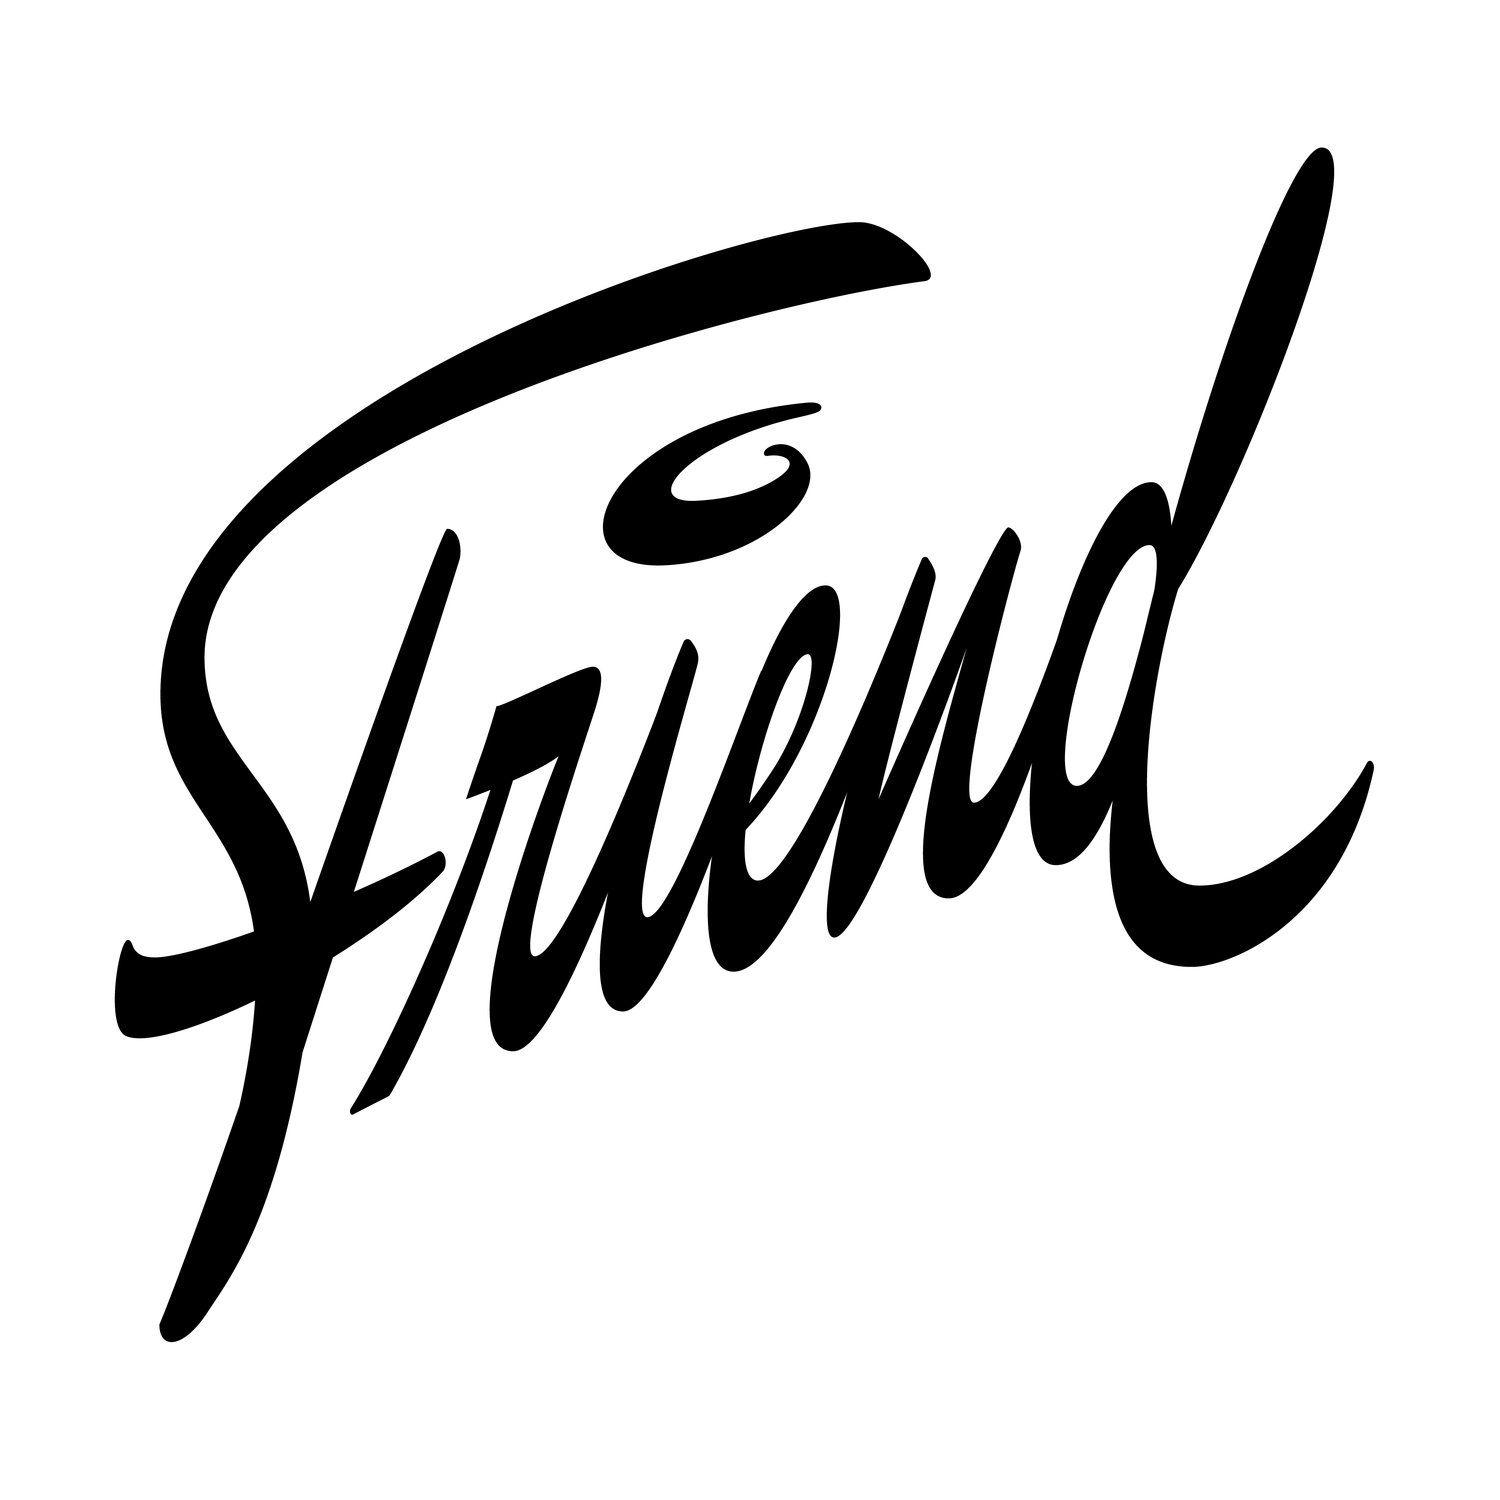 Friend Black and White Logo - LogoDix